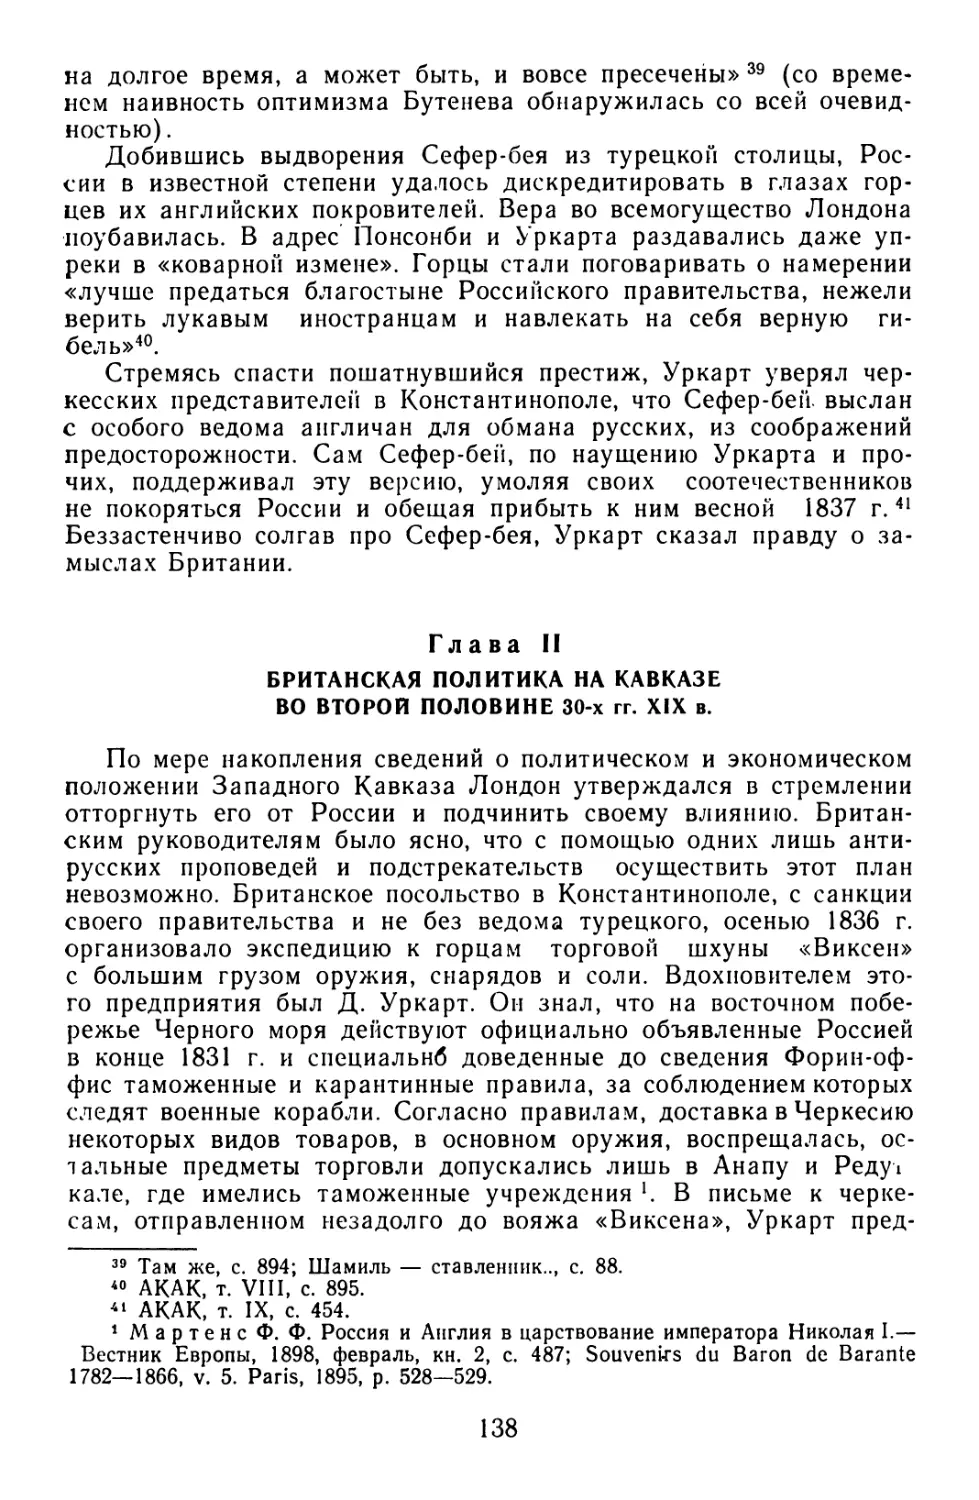 Глава II. Британская политика на Кавказе во второй половине 30-х гг. XIX в.